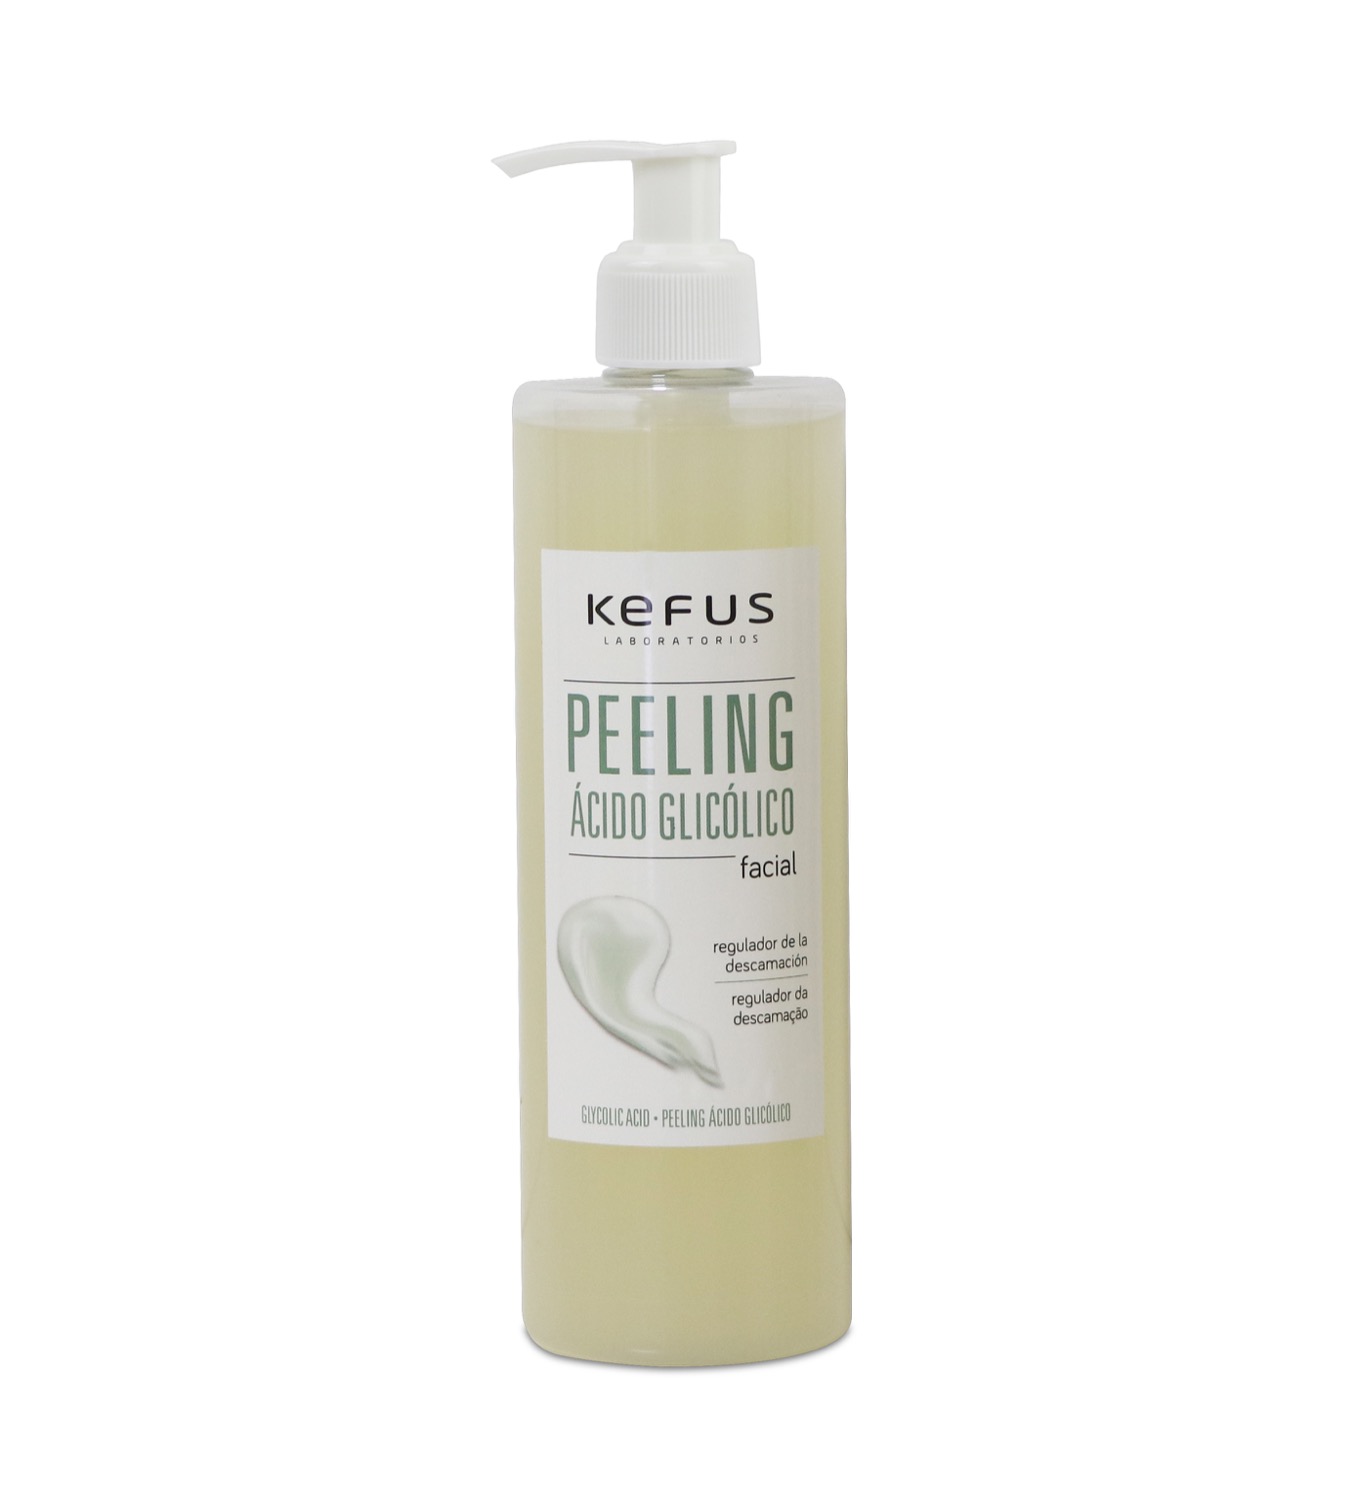 Peeling Ácido Glicólico Kefus 500 ml